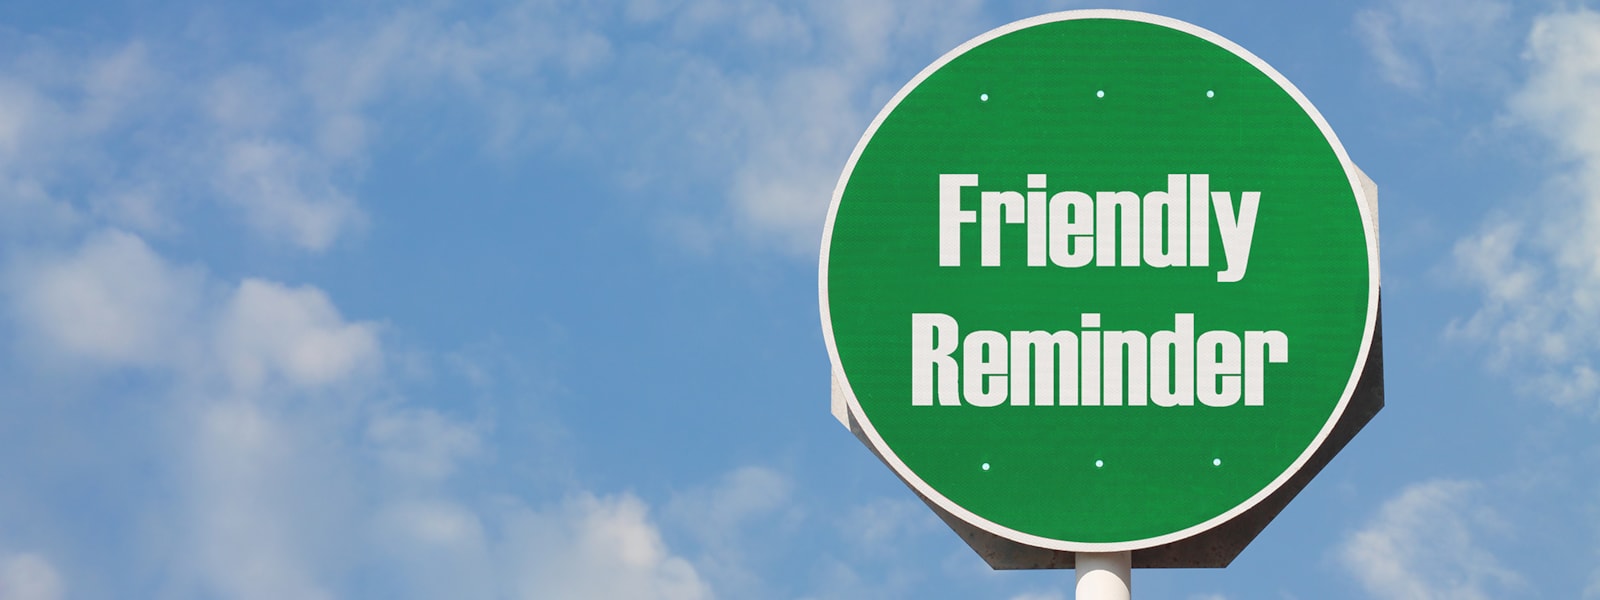 friendly reminder sign